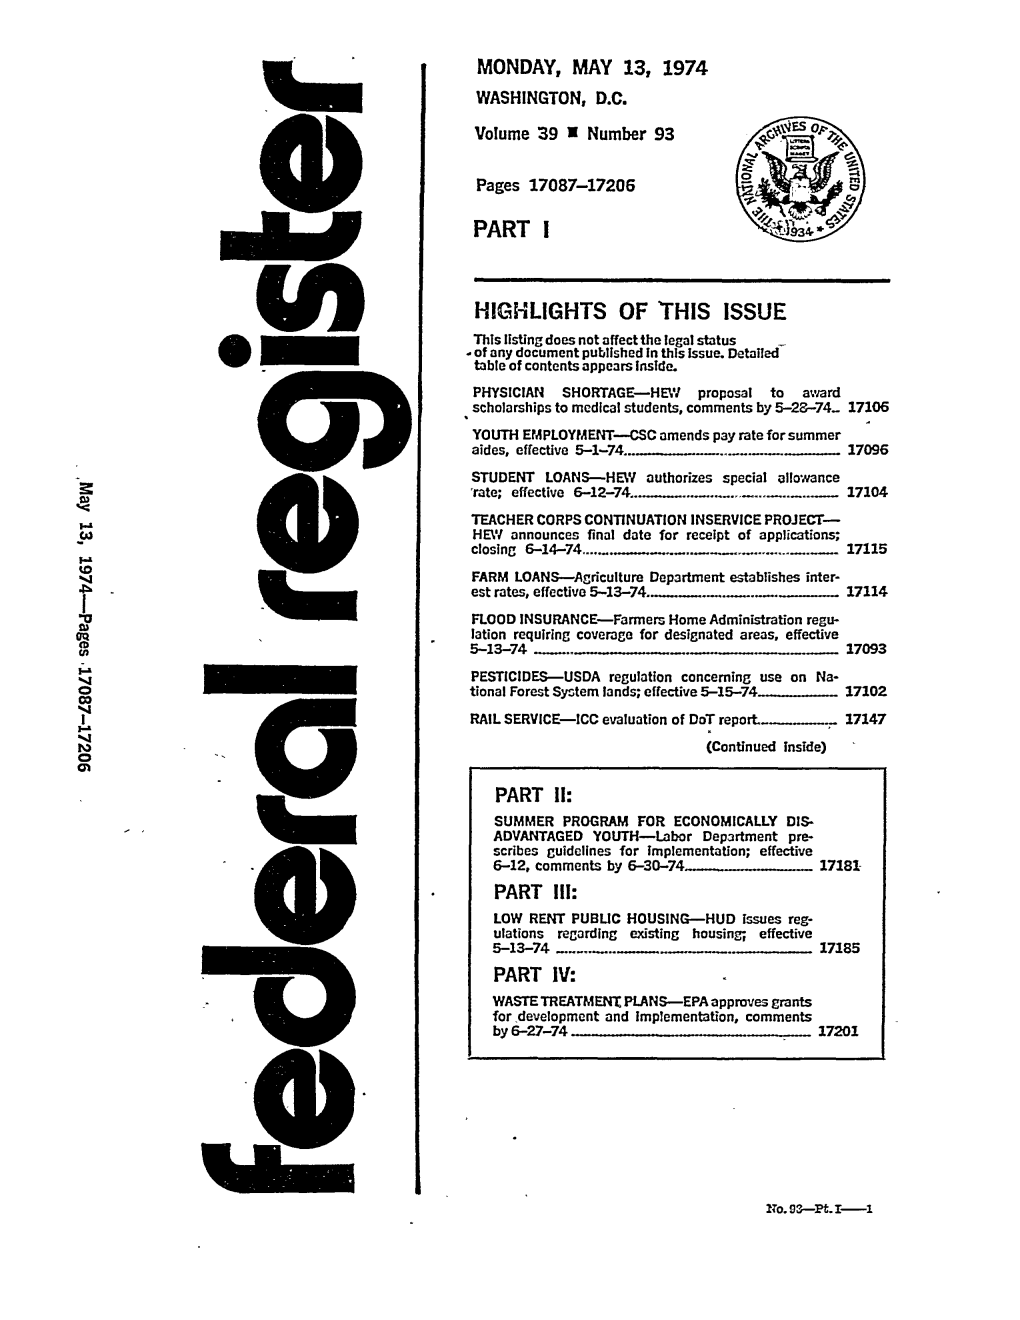 Federal Register: 39 Fed. Reg. 17087 (May 13, 1974)